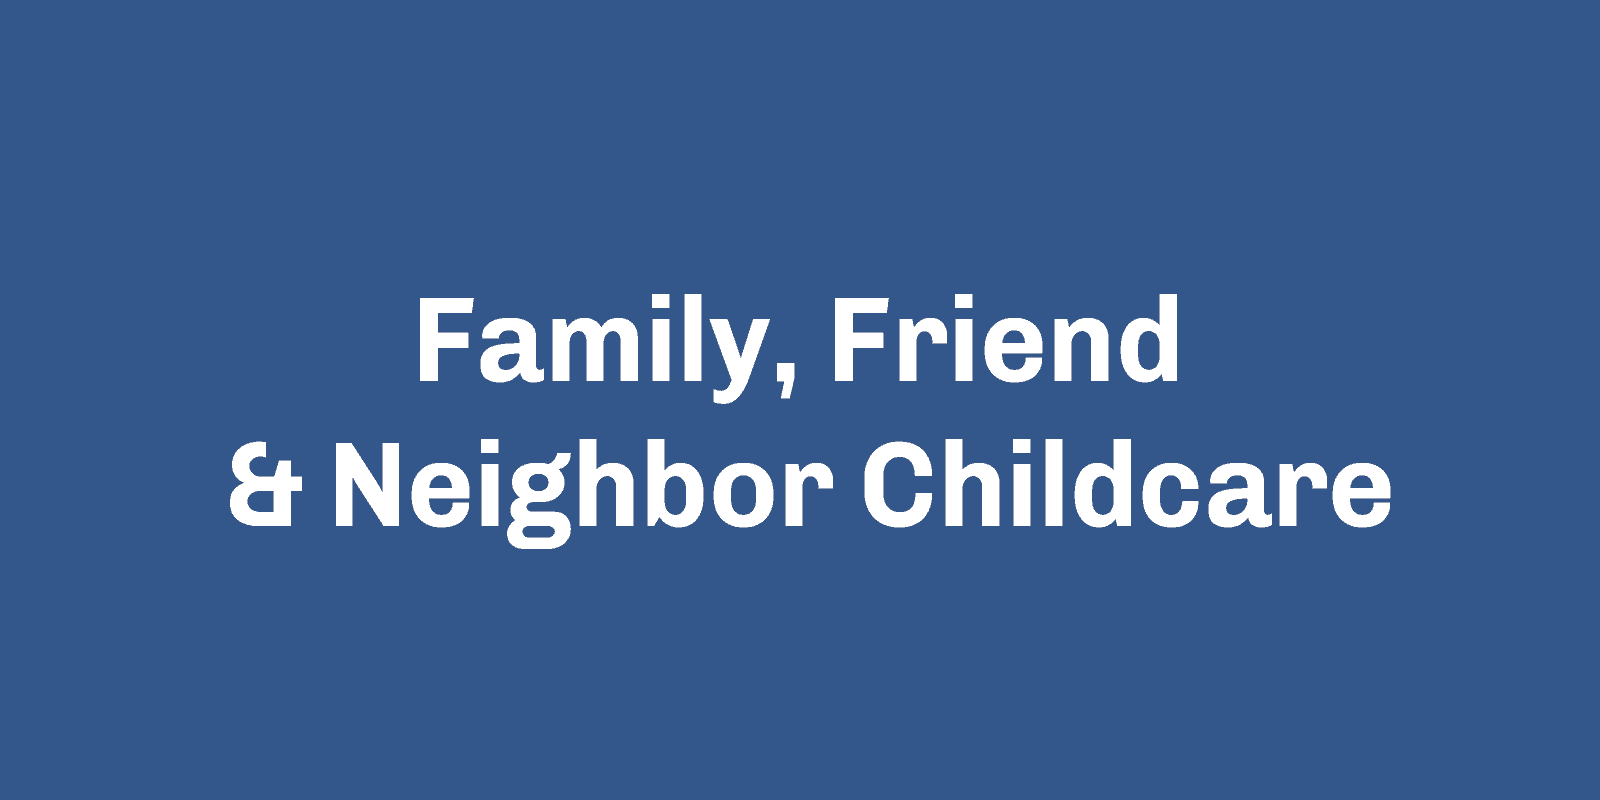 Family, Friend & Neighbor Childcare